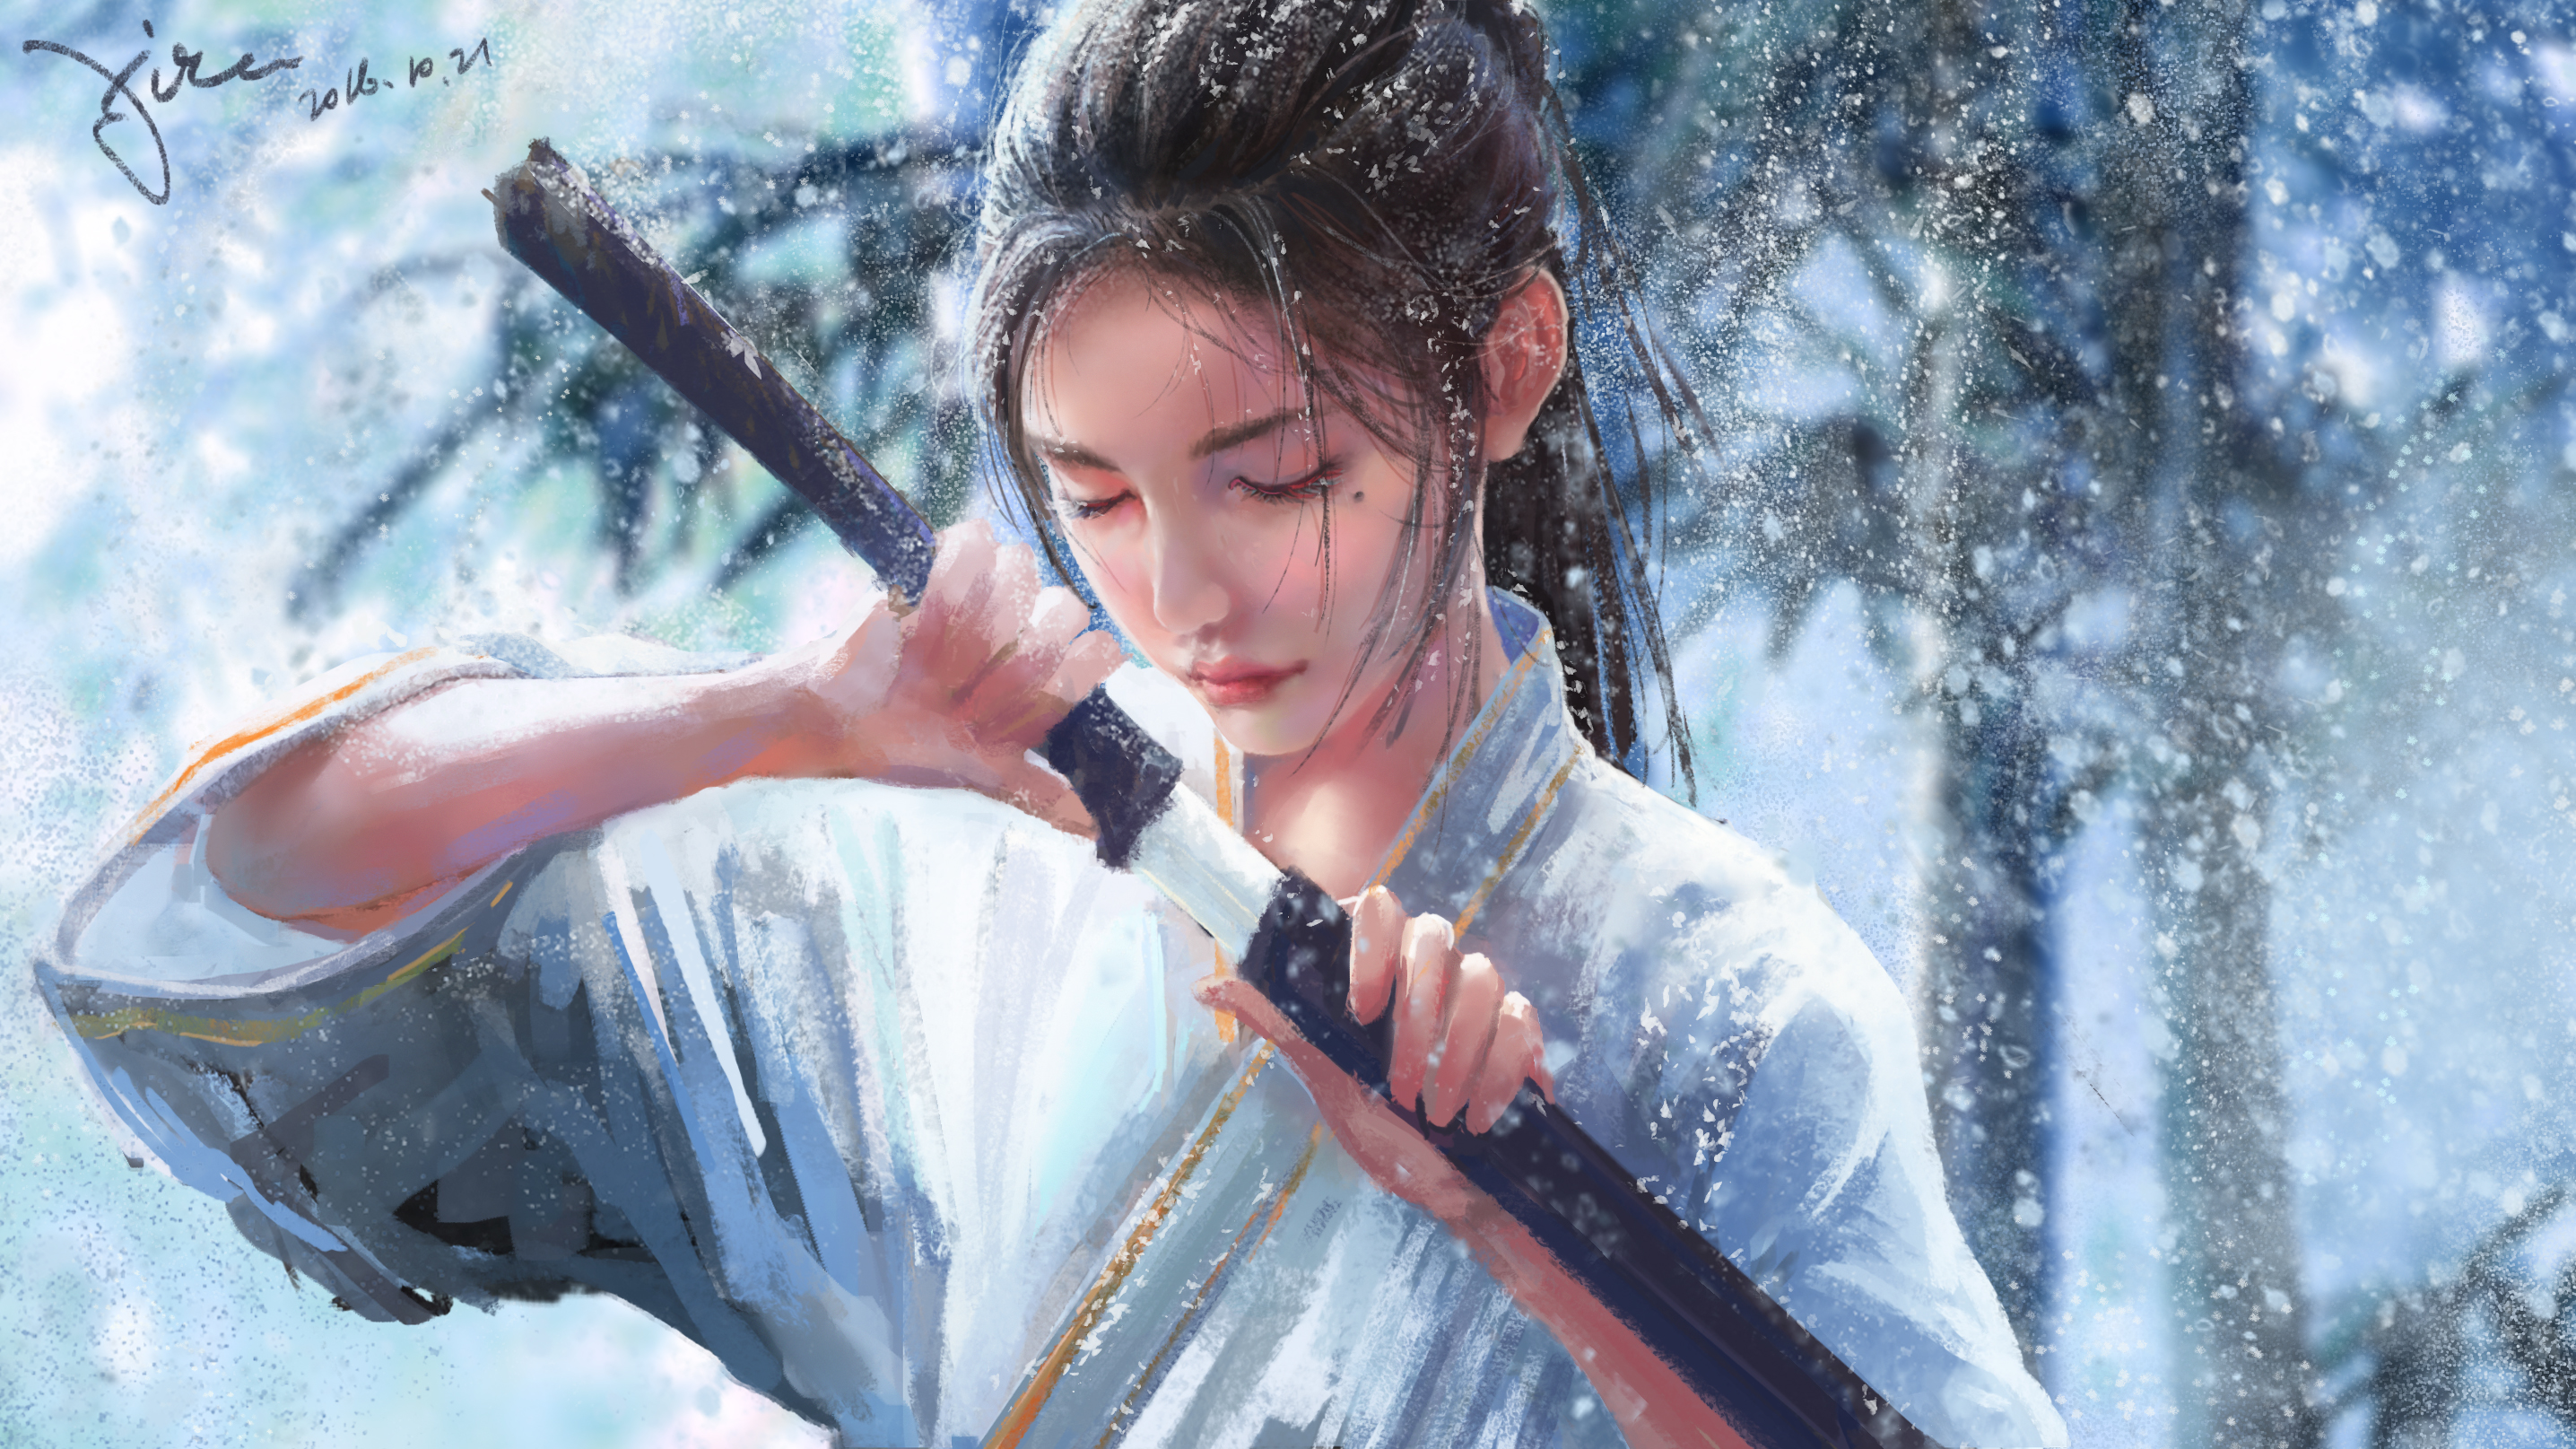 woman warrior, snowflake, samurai, fantasy, snowfall